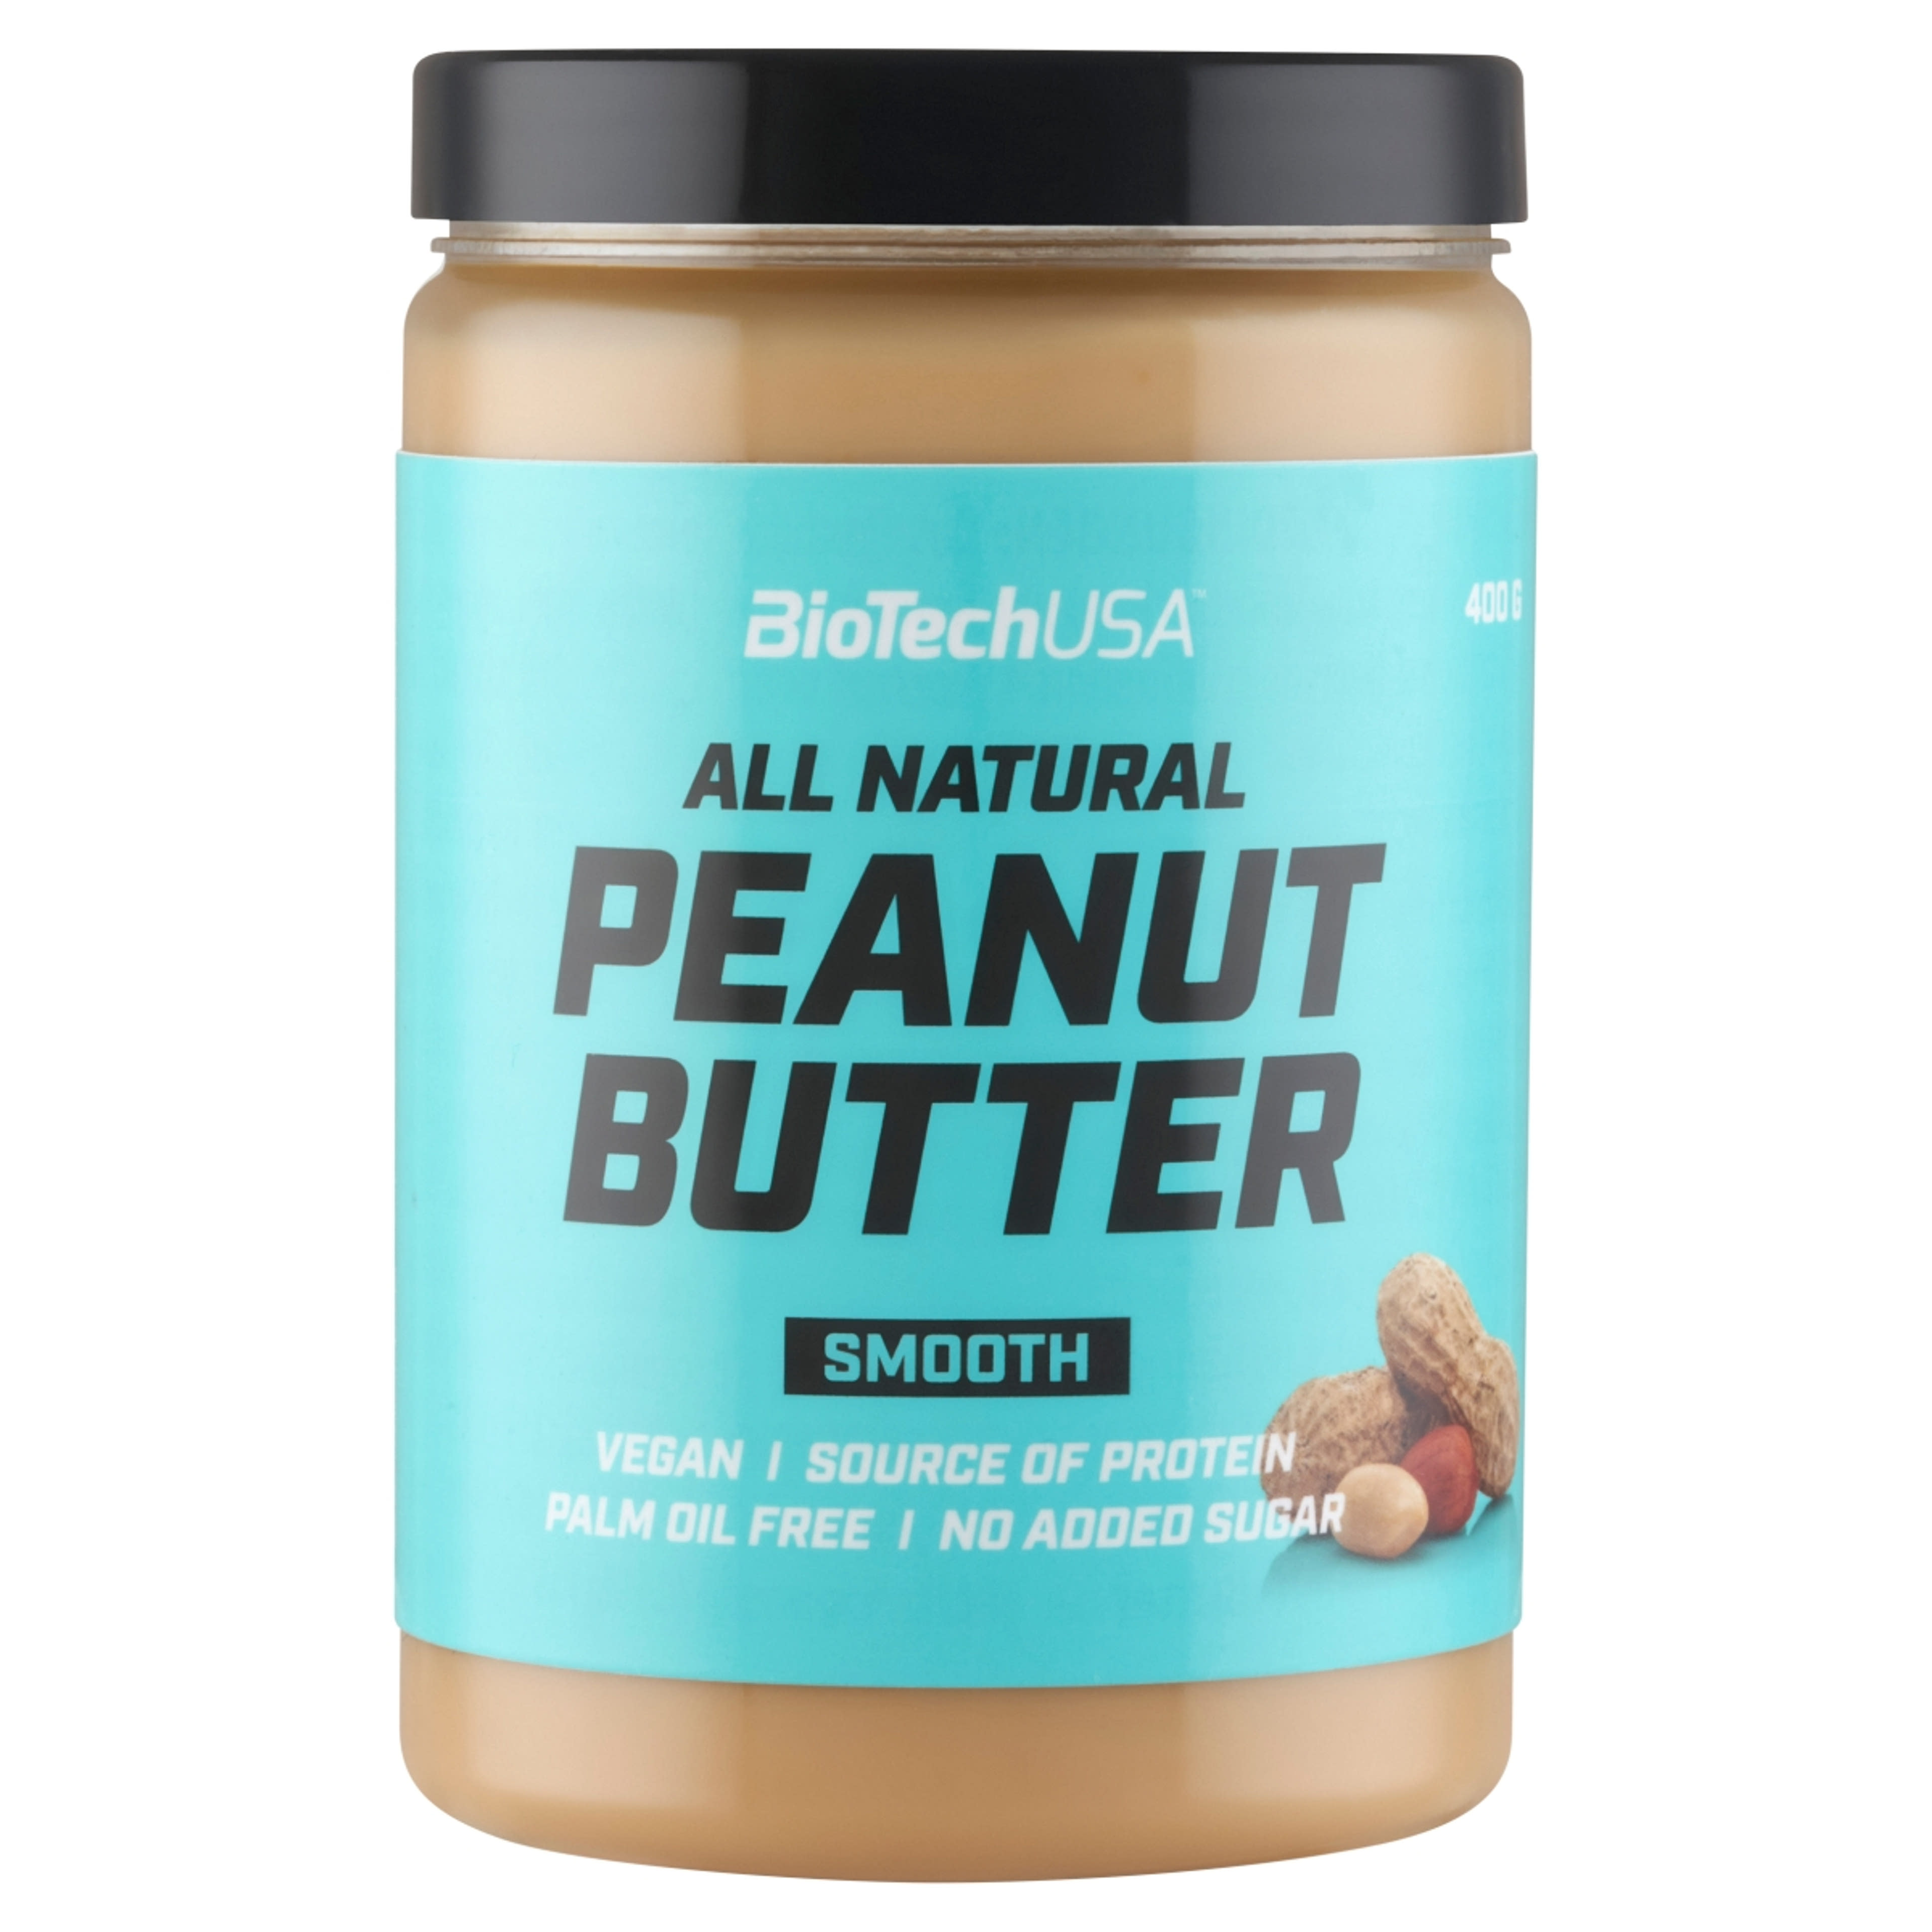 BioTechUSA Peanut Butter smooth - 400 g-1